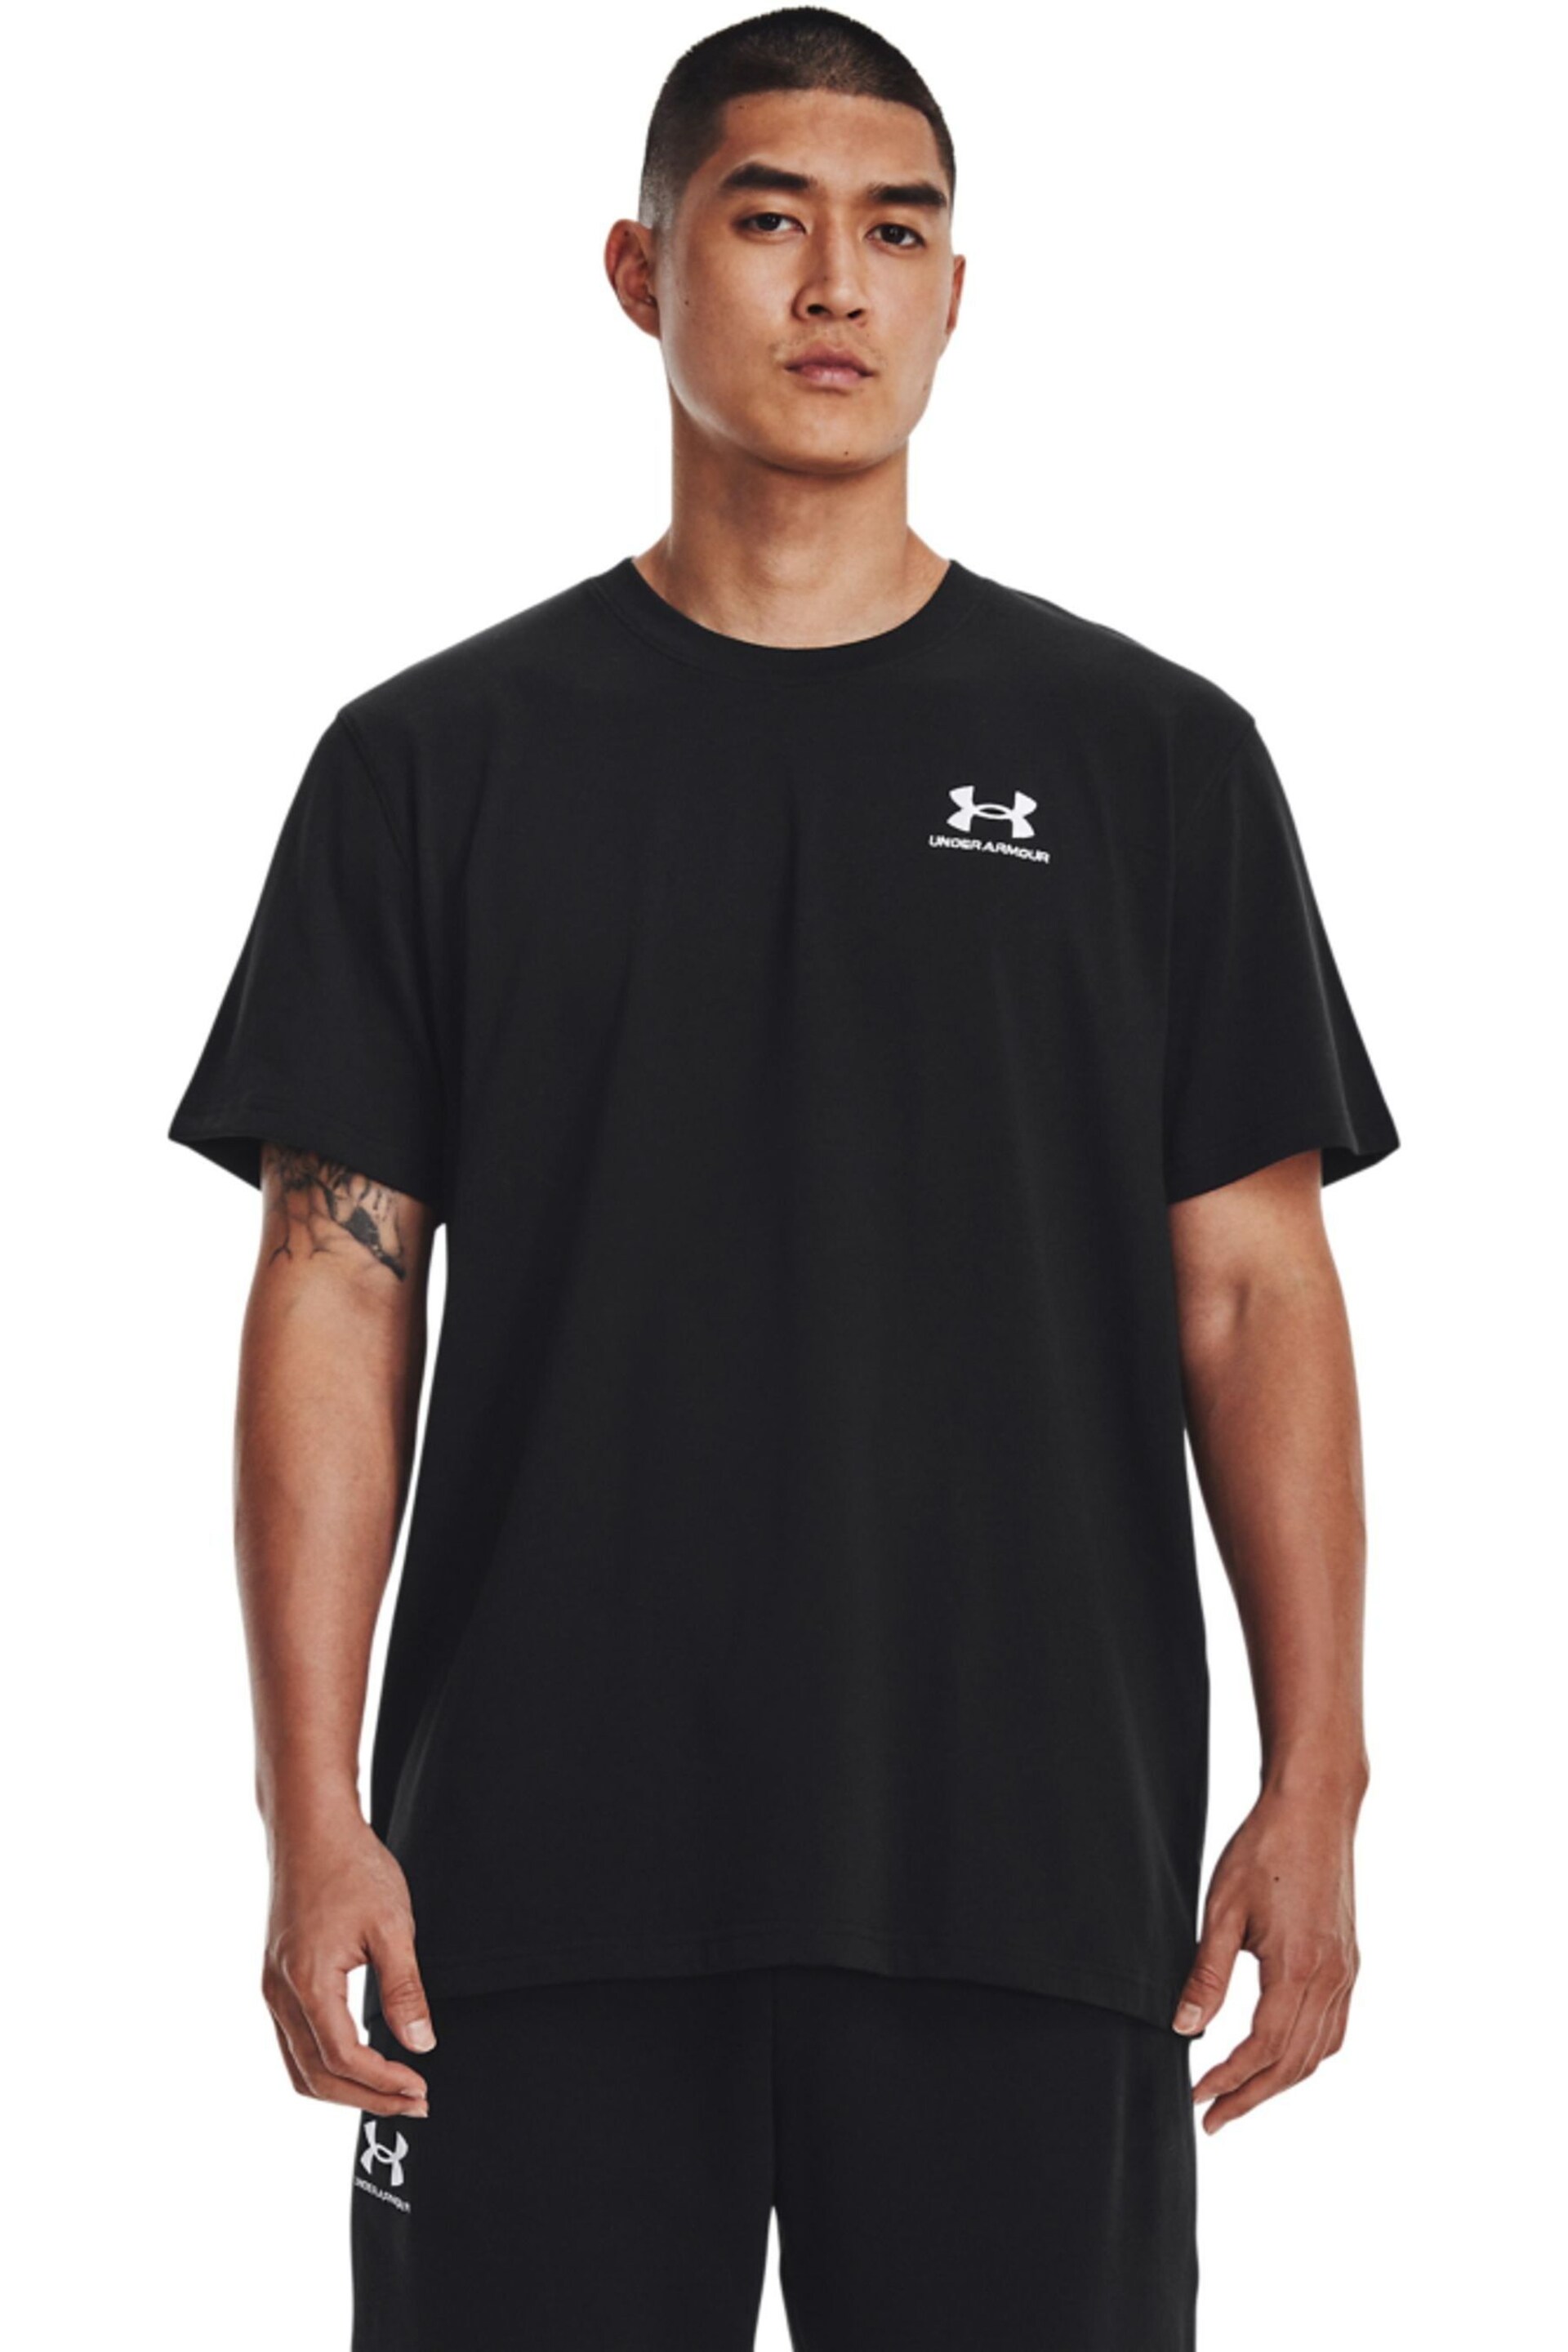 Under Armour Black Logo Heavyweight T-Shirt - Image 1 of 6